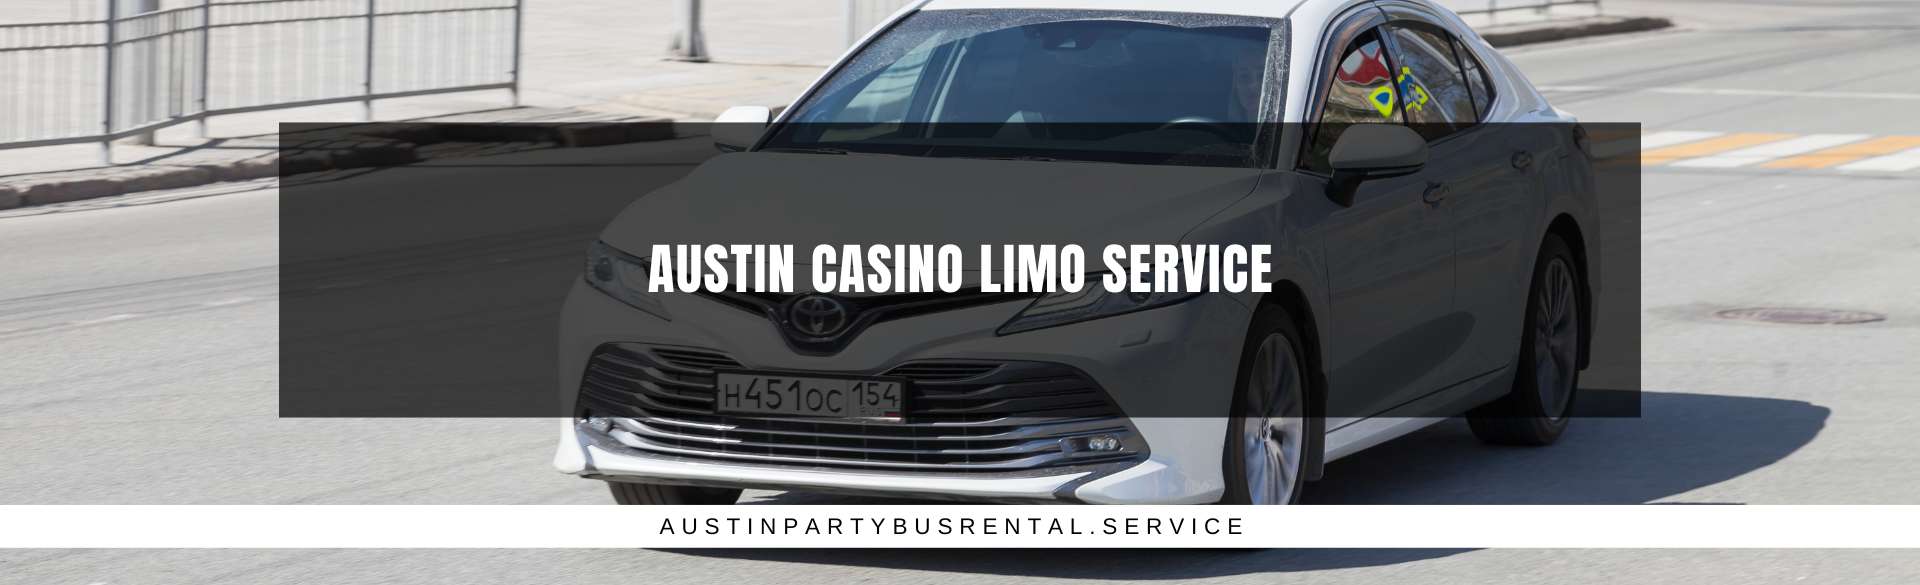 Austin Casino Limo Service